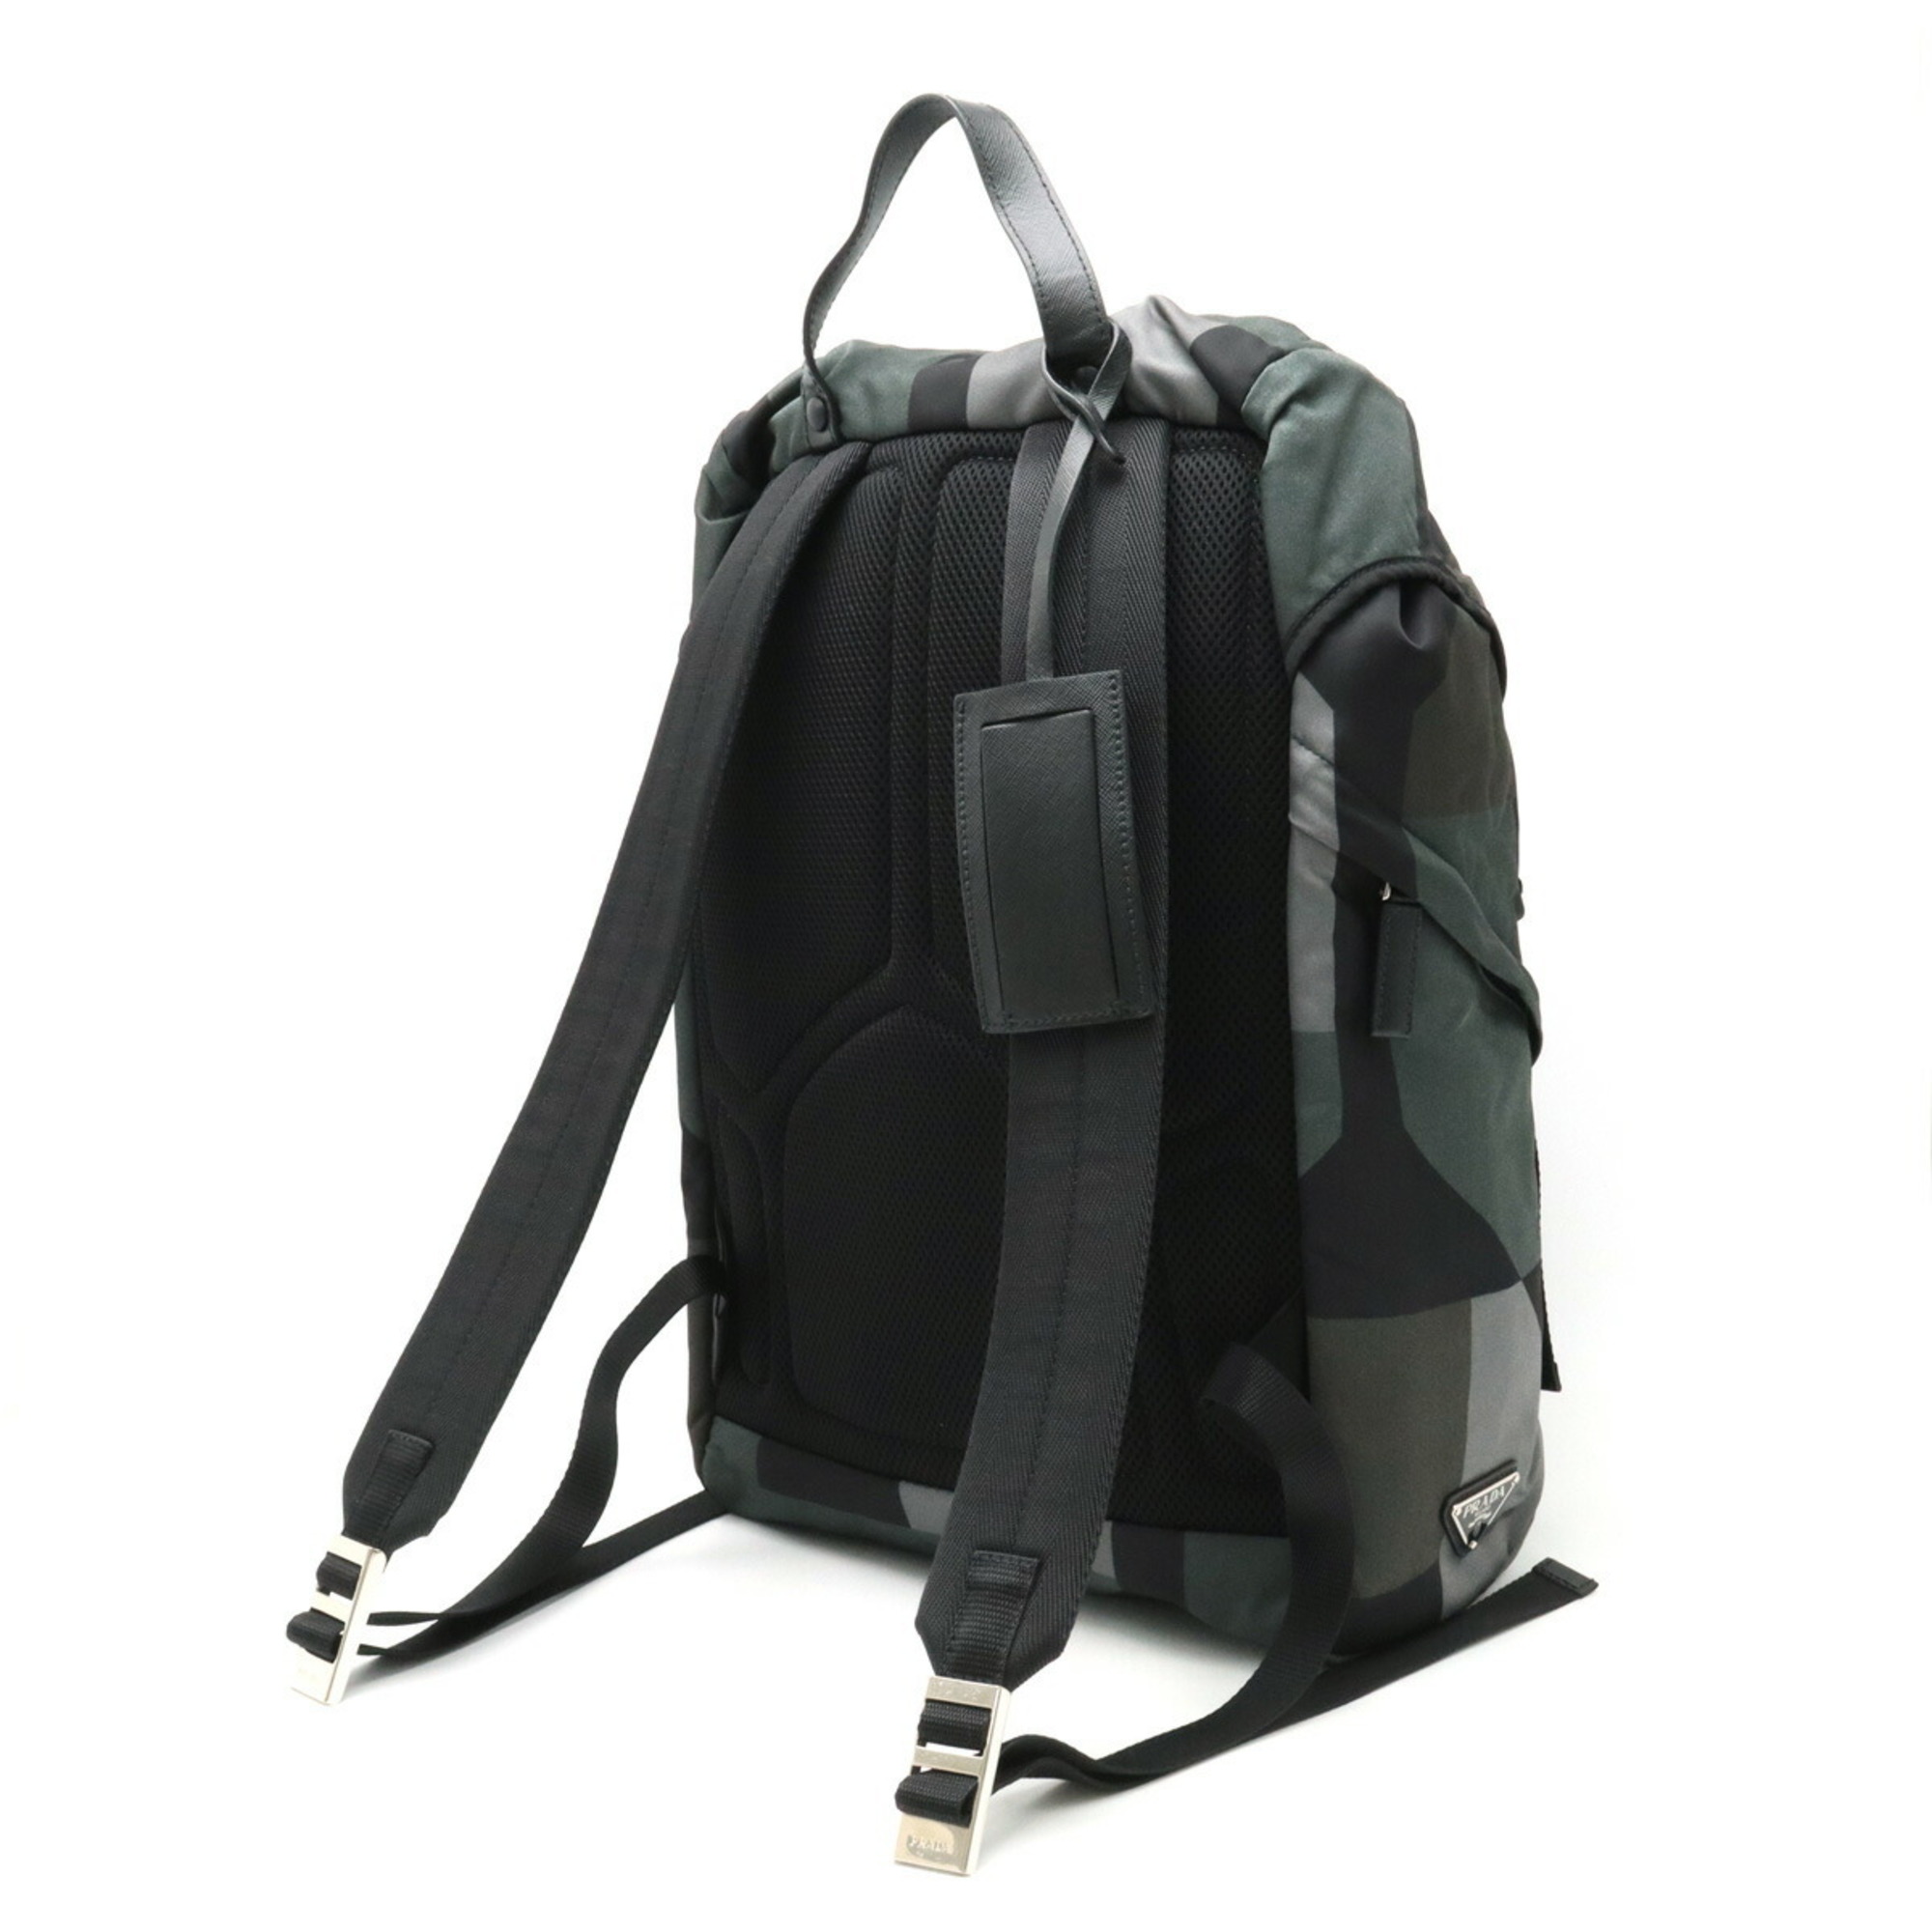 PRADA Backpack Rucksack Daypack Geometric Pattern Nylon Leather ARDESIA Khaki Gray Multi Overseas Duty Free Store Purchased Item 2VZ135